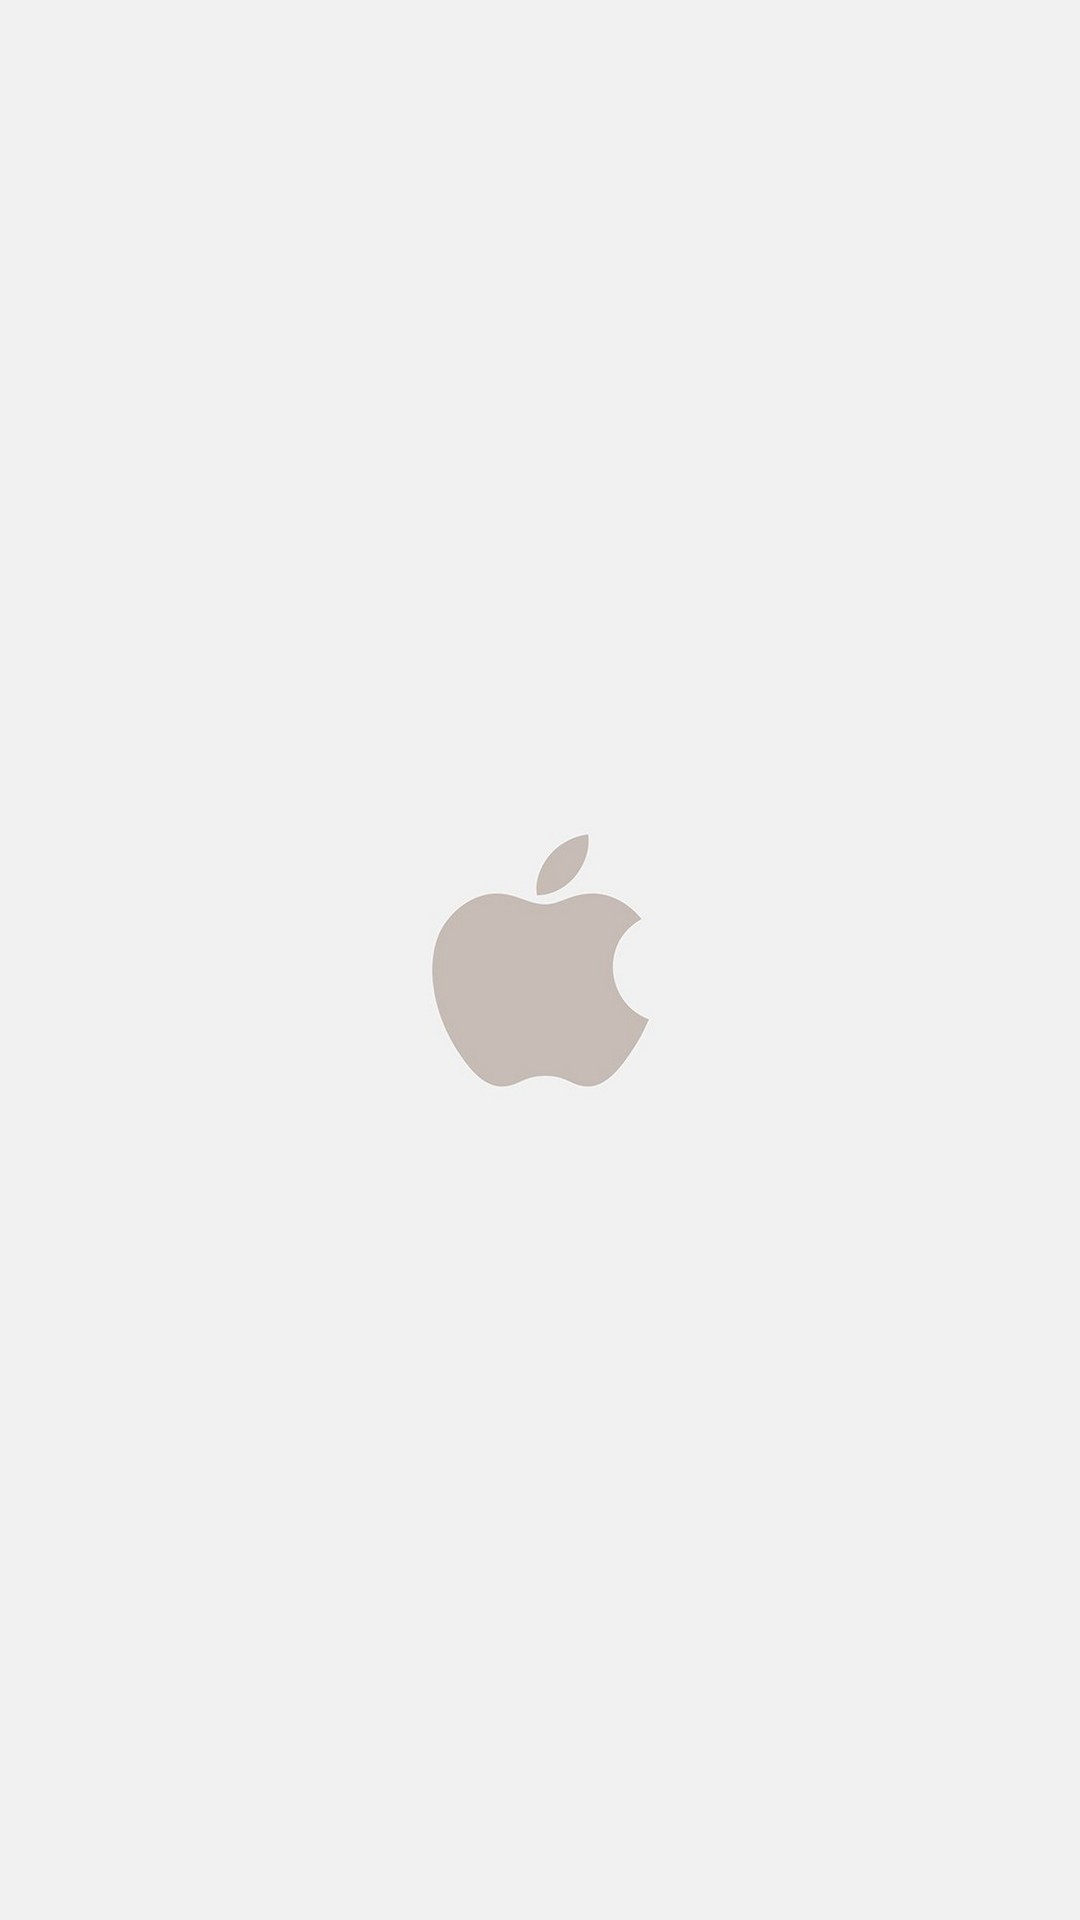 White Apple iPhone 5 wallpaper